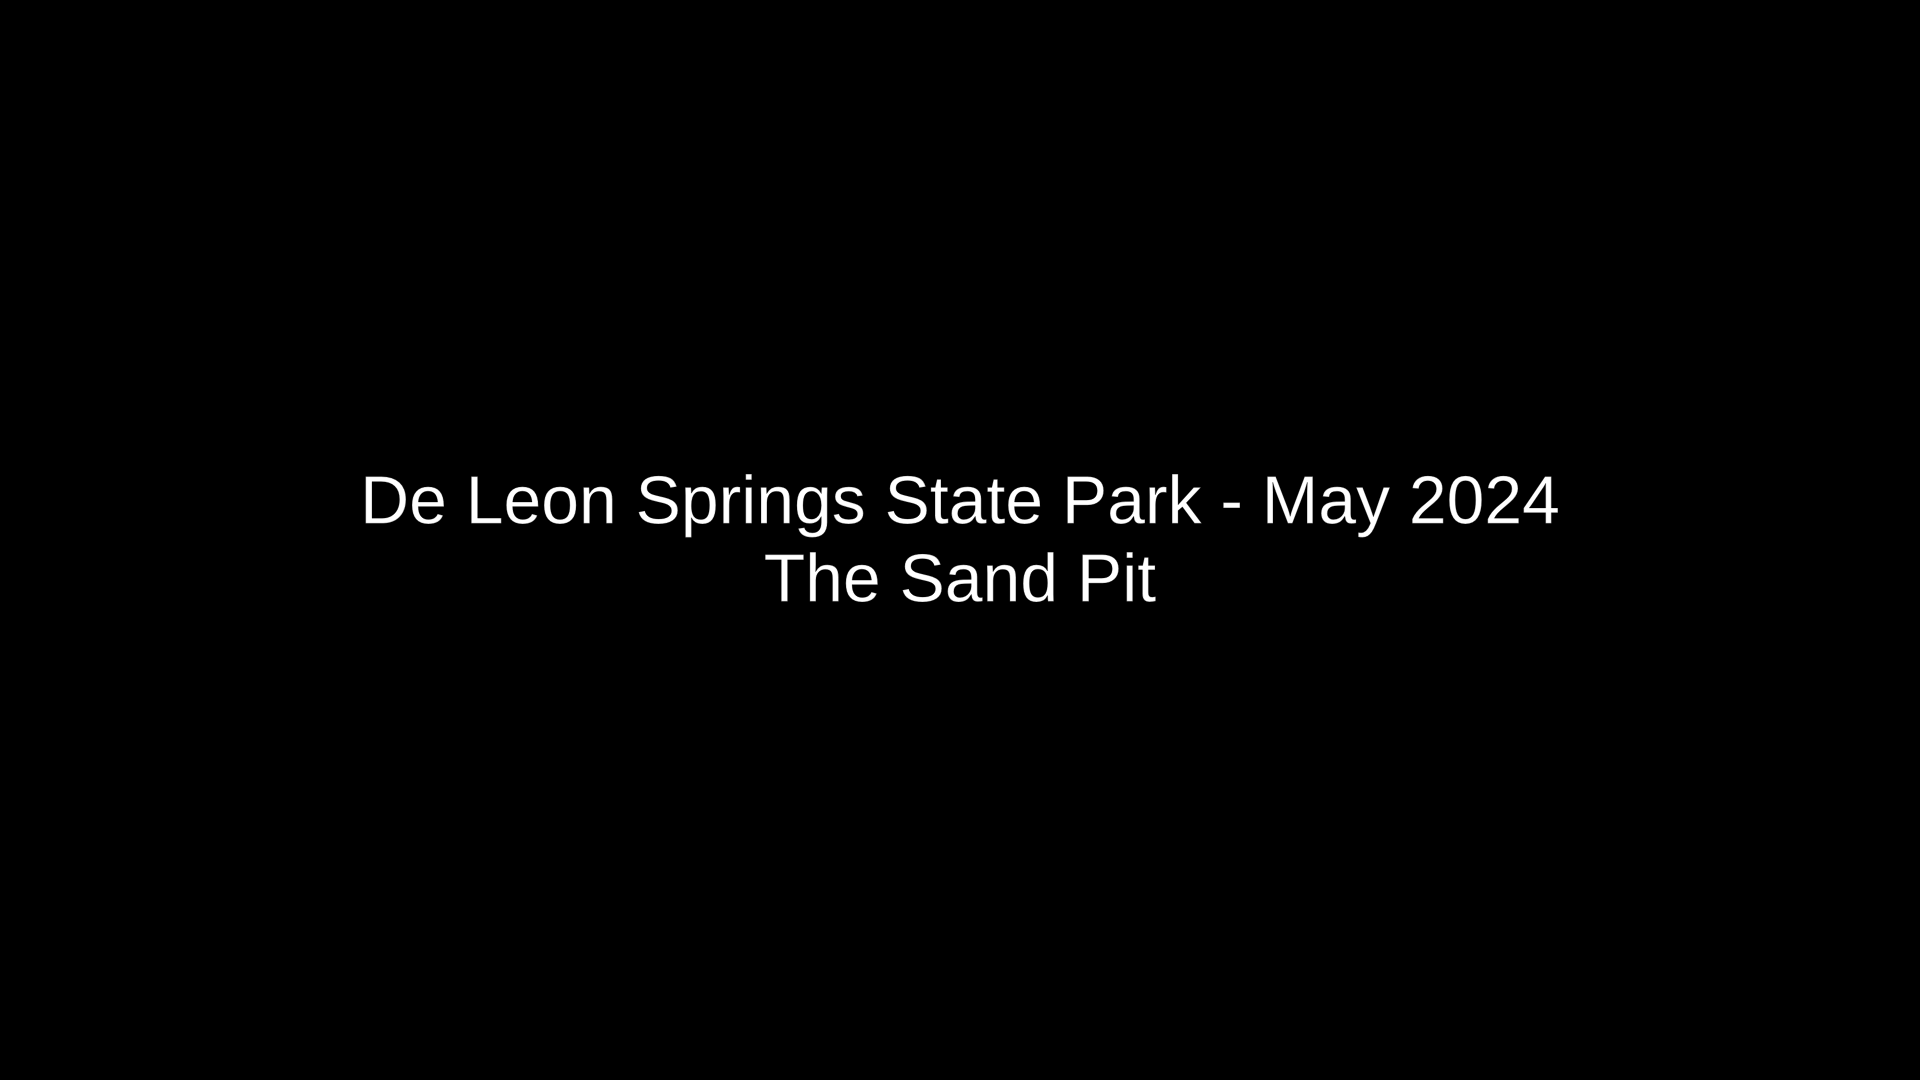 De Leon Springs State Park | De Leon Springs, FL (Государственный парк Де Леон Спрингс | Флорида)